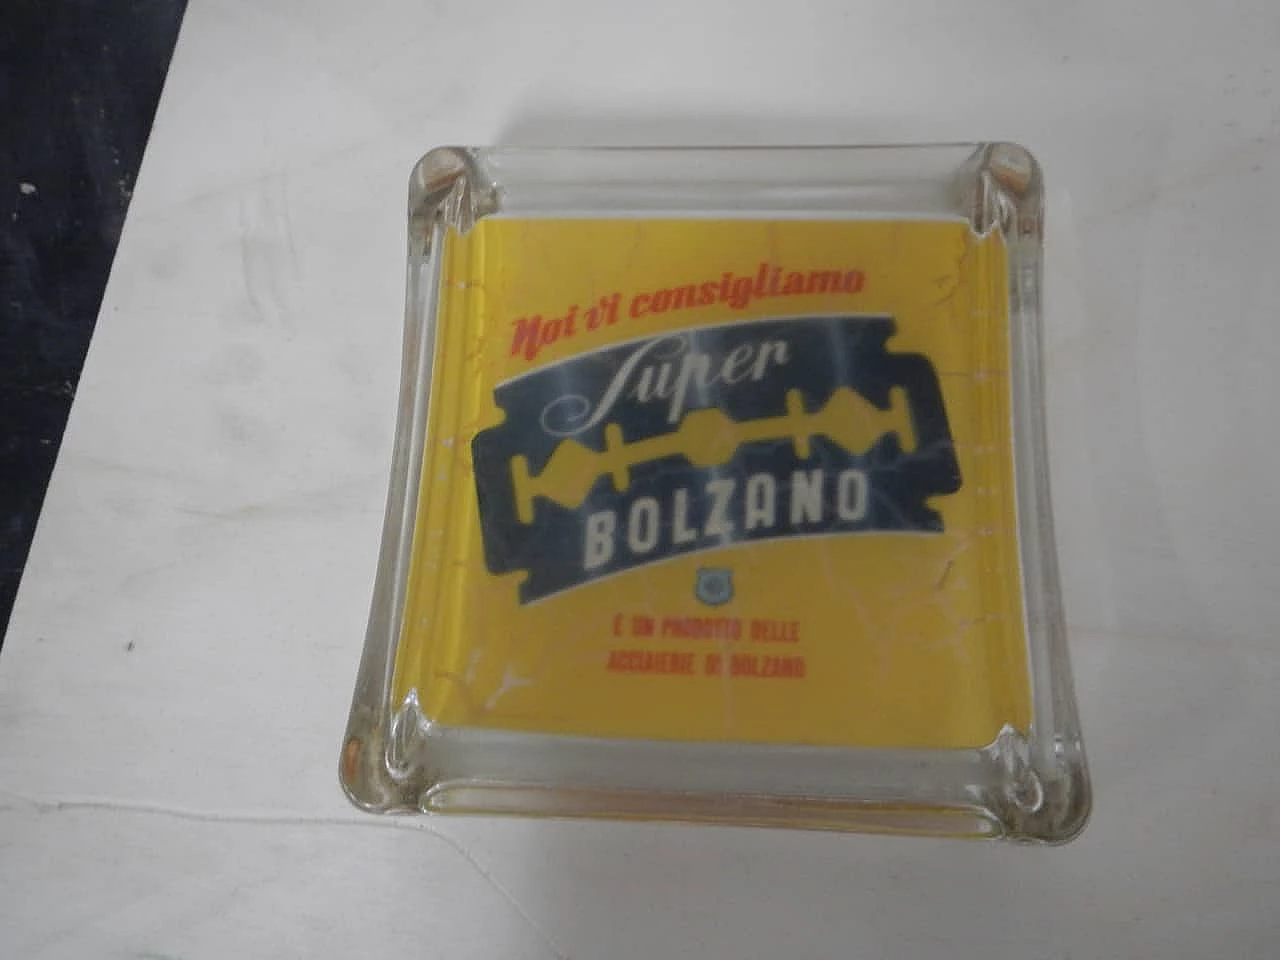 Super Bolzano glass advertising container, 1960s 1